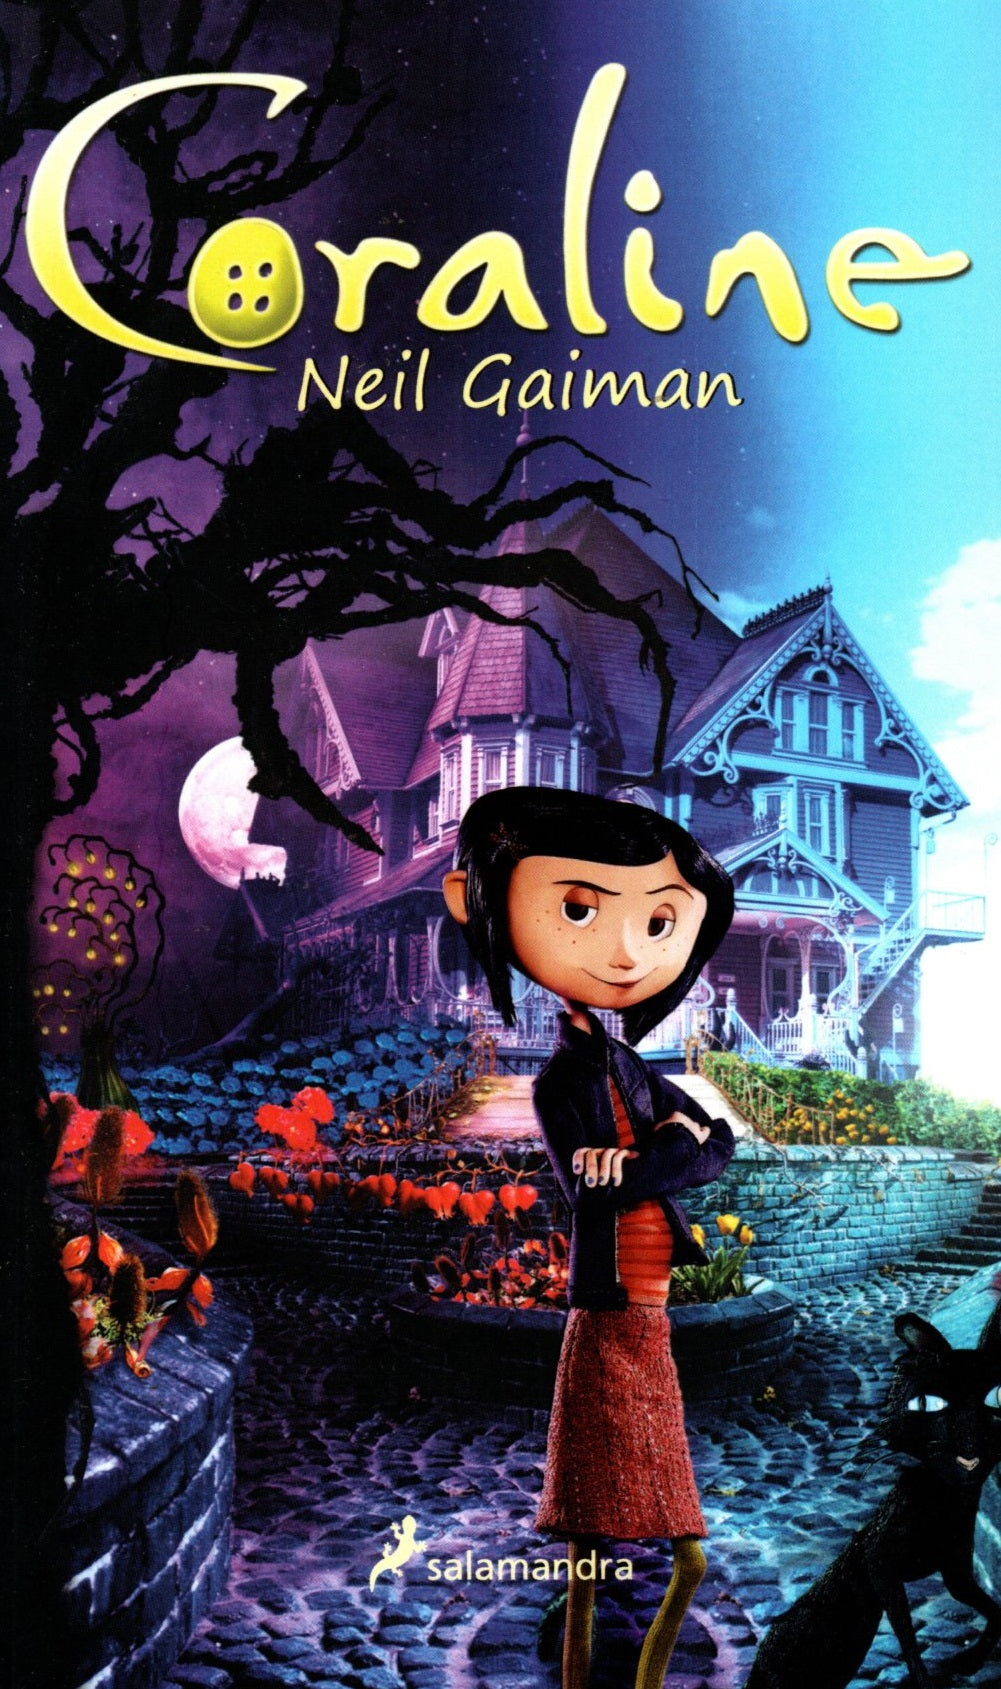 Libro Neil Gaiman - Coraline